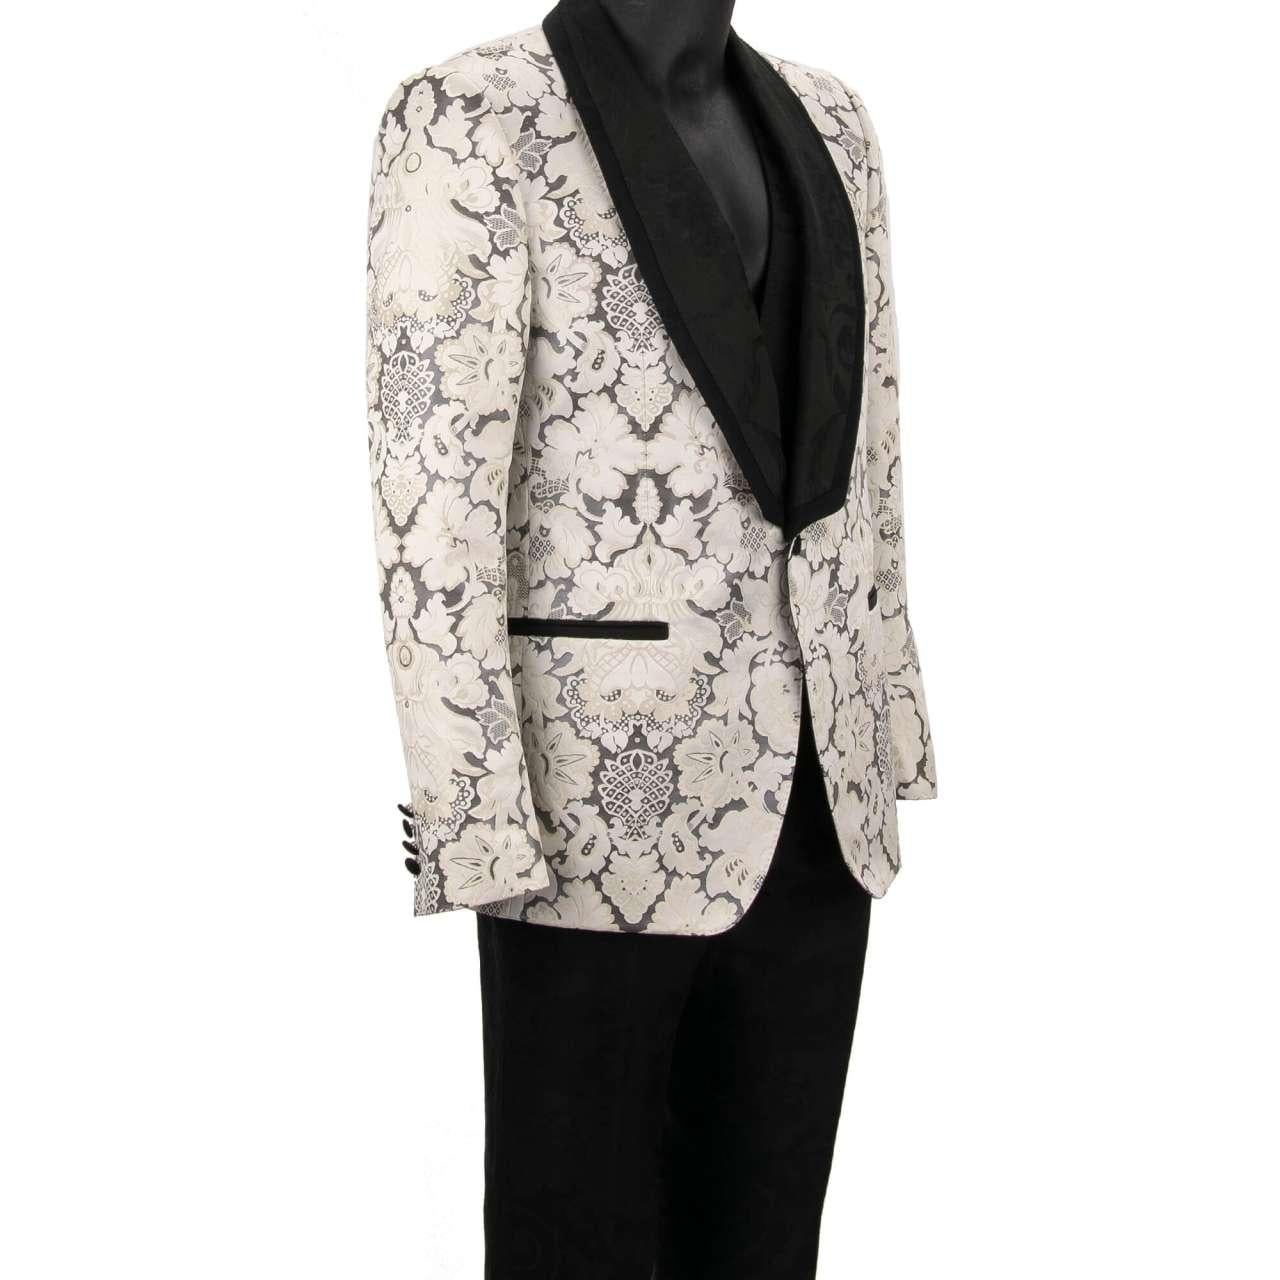 D&G Baroque 3 Piece Jacquard Suit Jacket Waistcoat MARTINI White Black 54 For Sale 4